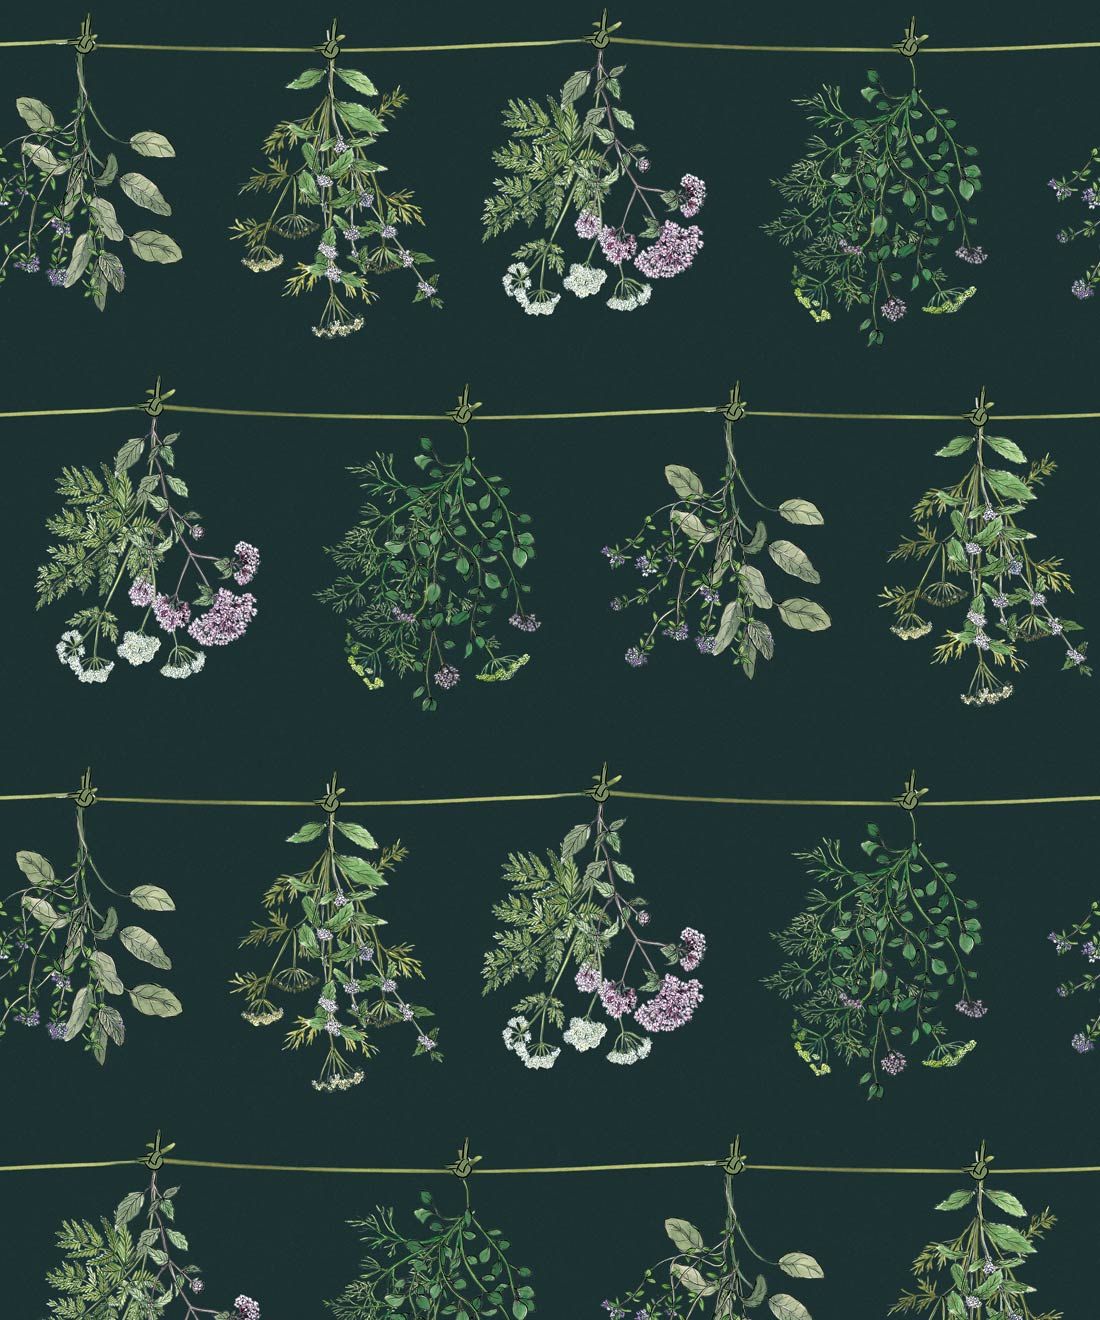 Dried Herbs Wallpaper